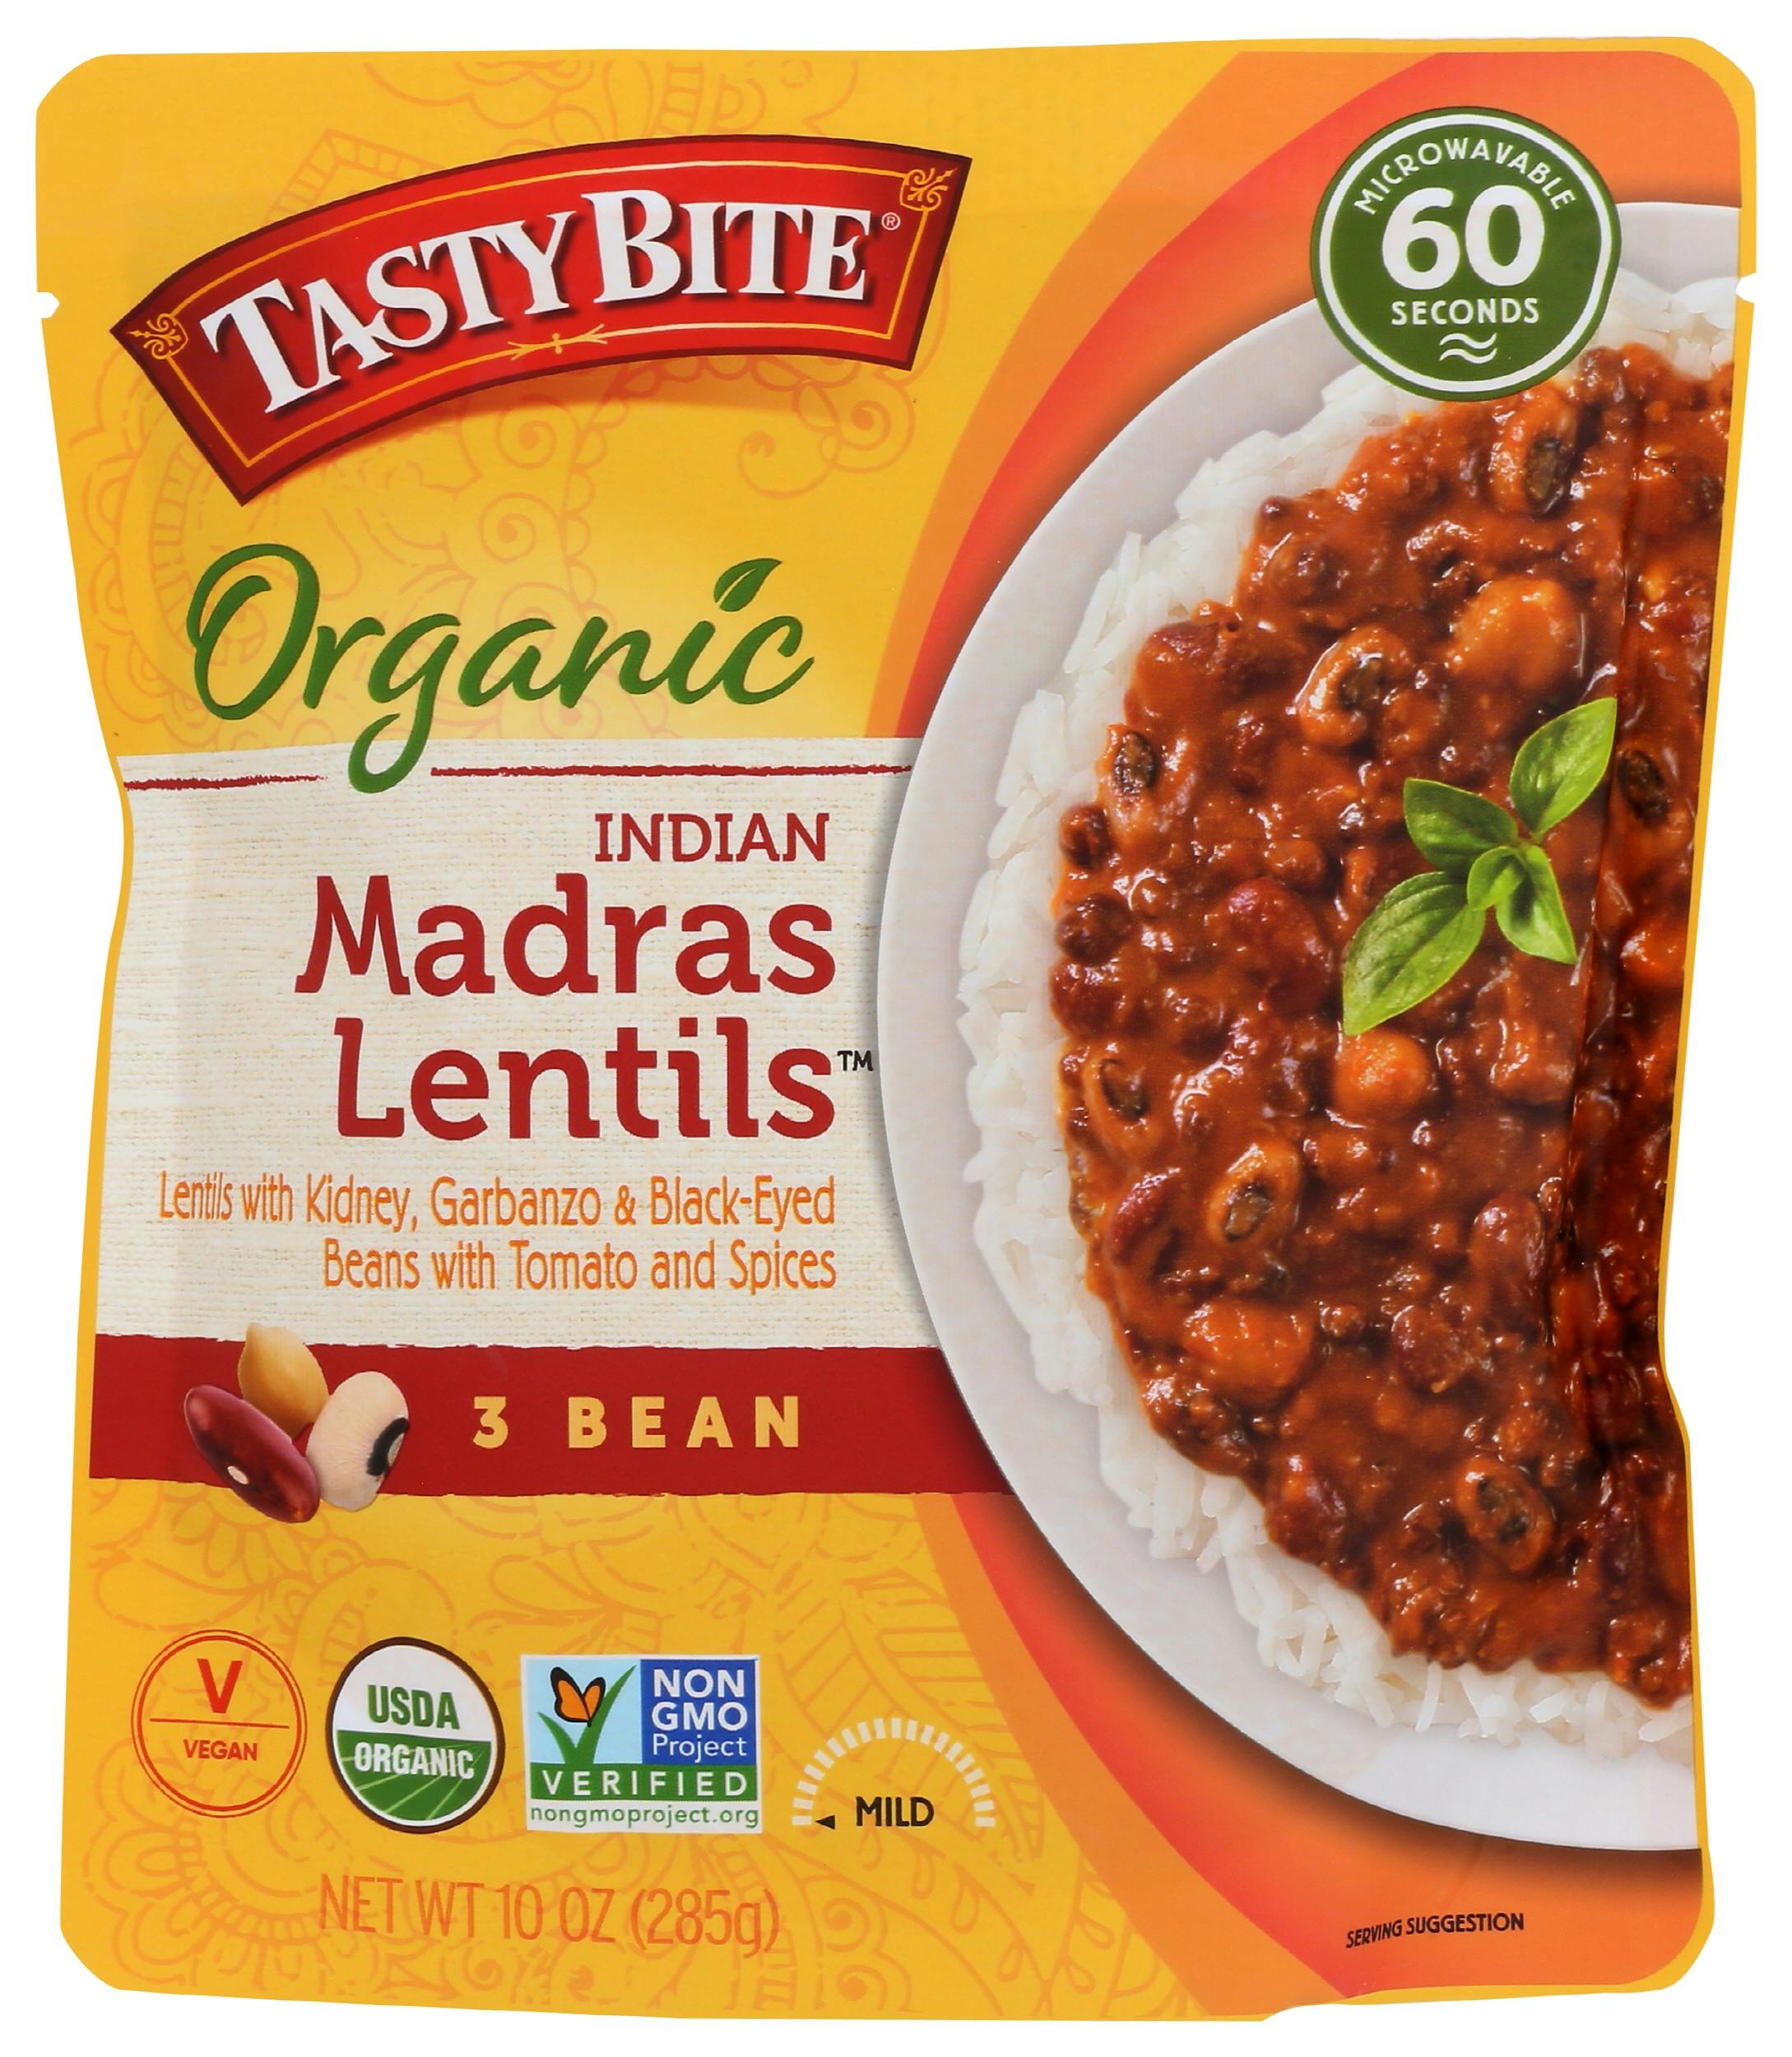 Tasty Bite Organic Madras Lentils